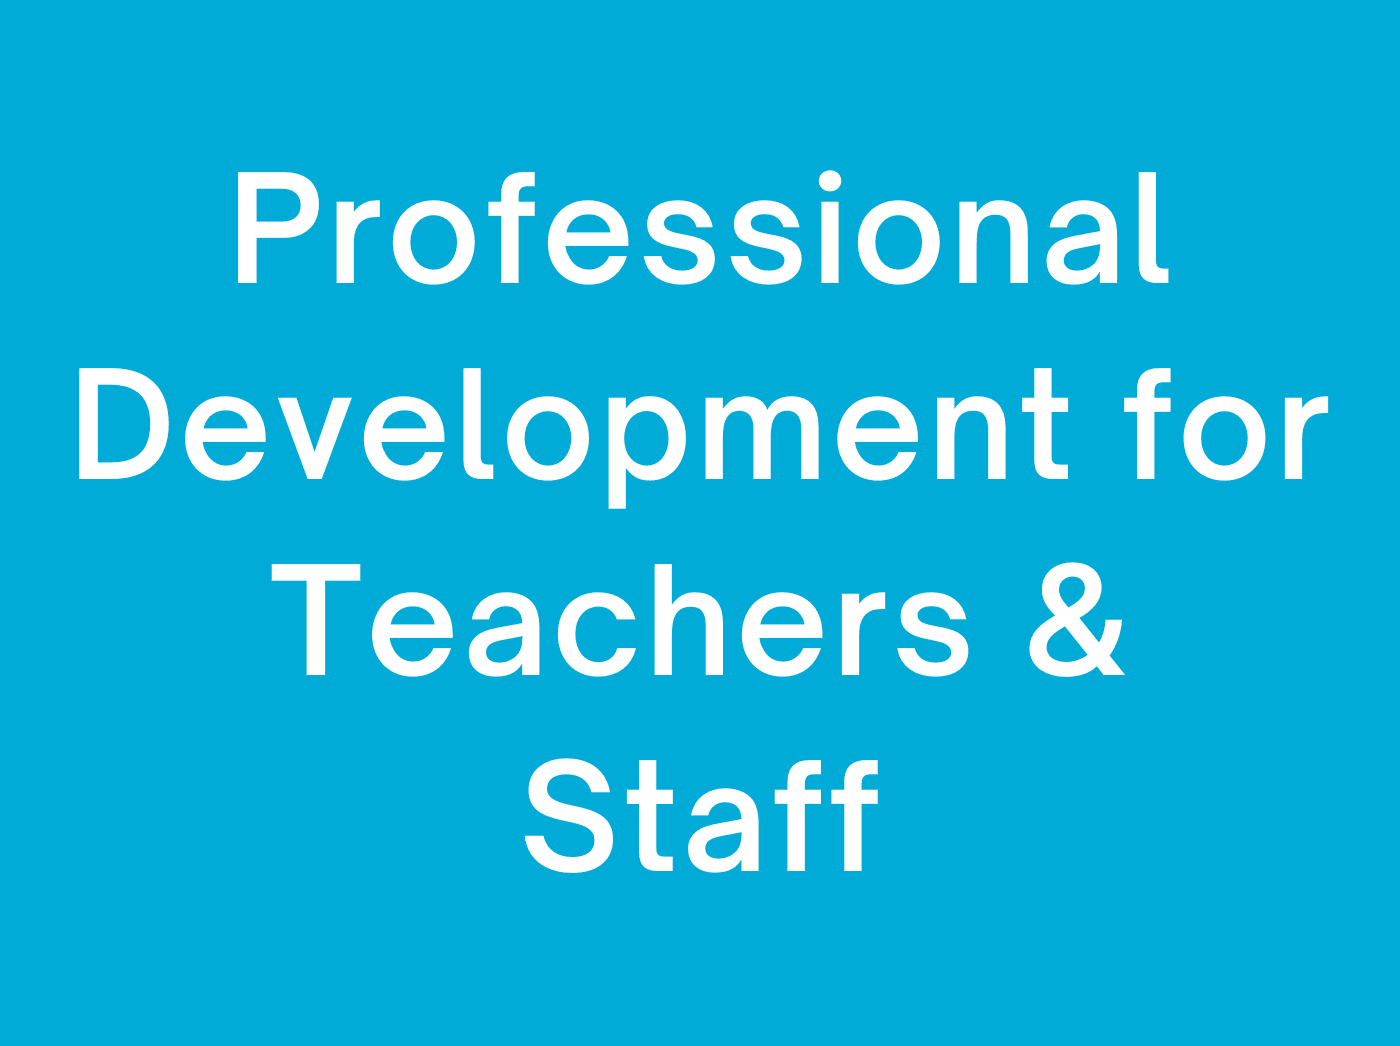 Professional Development for Teachers and Staff